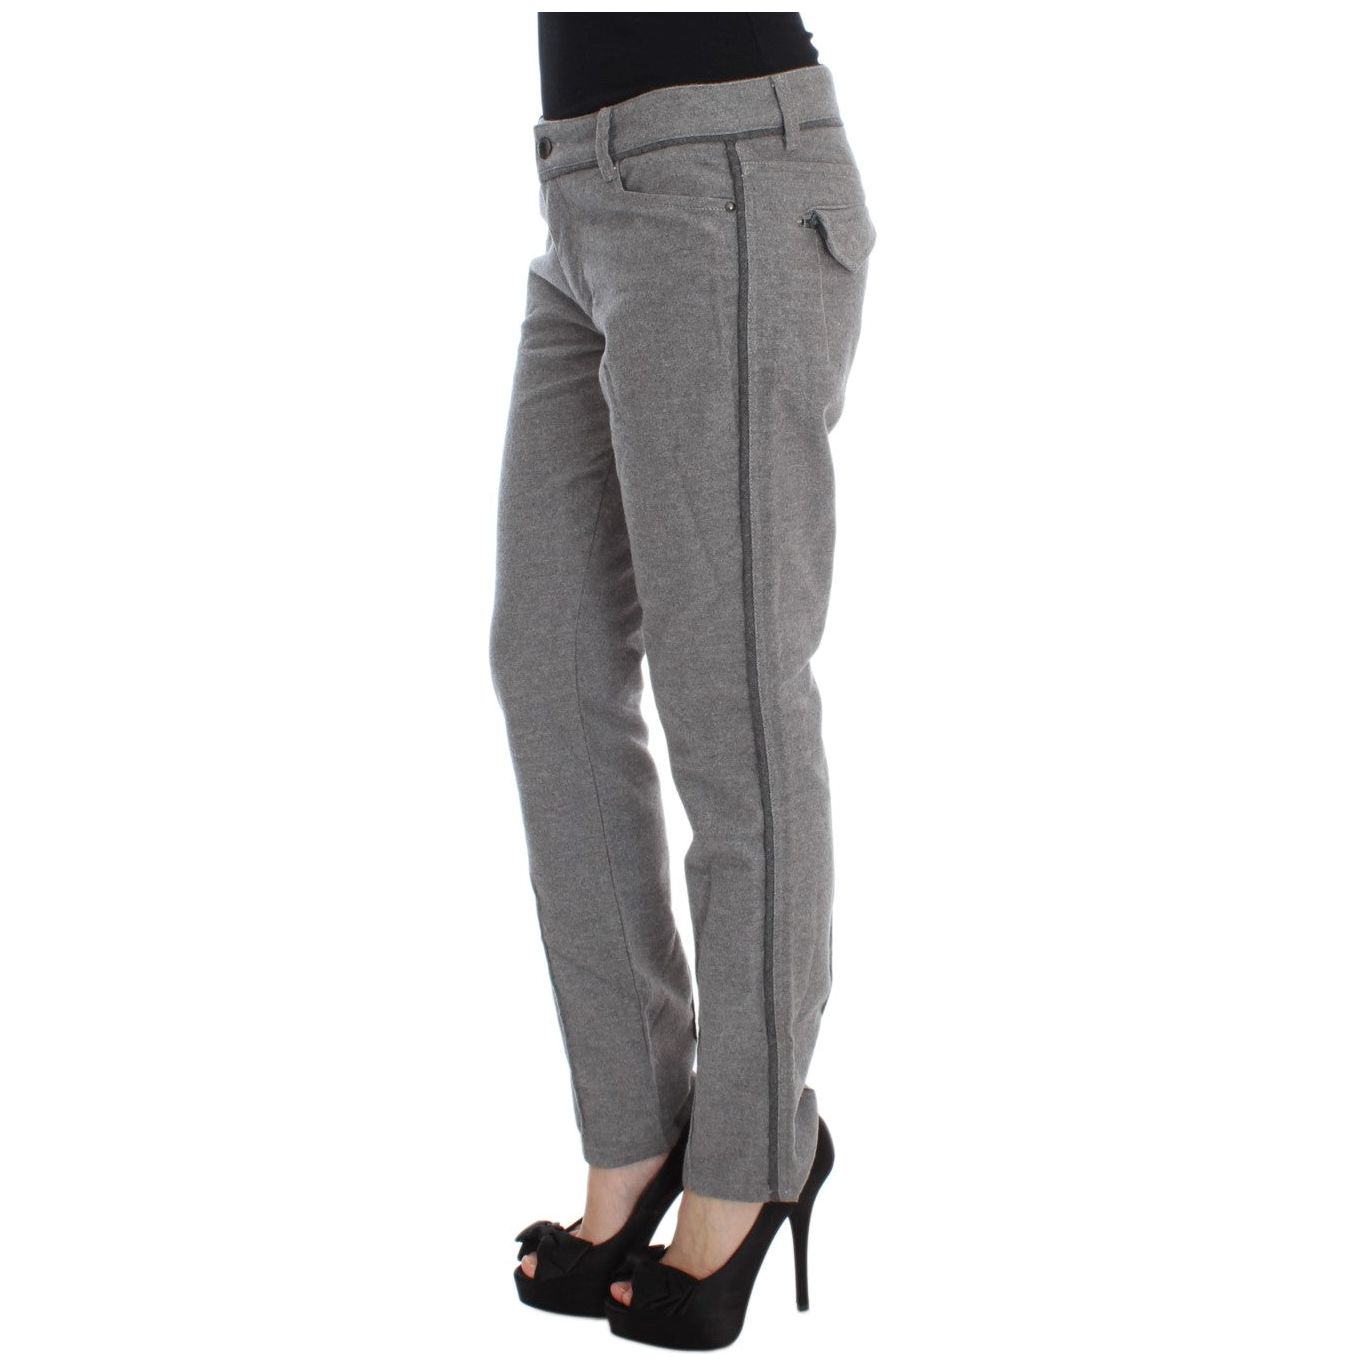 Ermanno Scervino Chic Gray Casual Cotton Pants gray-cotton-straight-fit-casual-pants 330370-gray-cotton-straight-fit-casual-pants-1.jpg